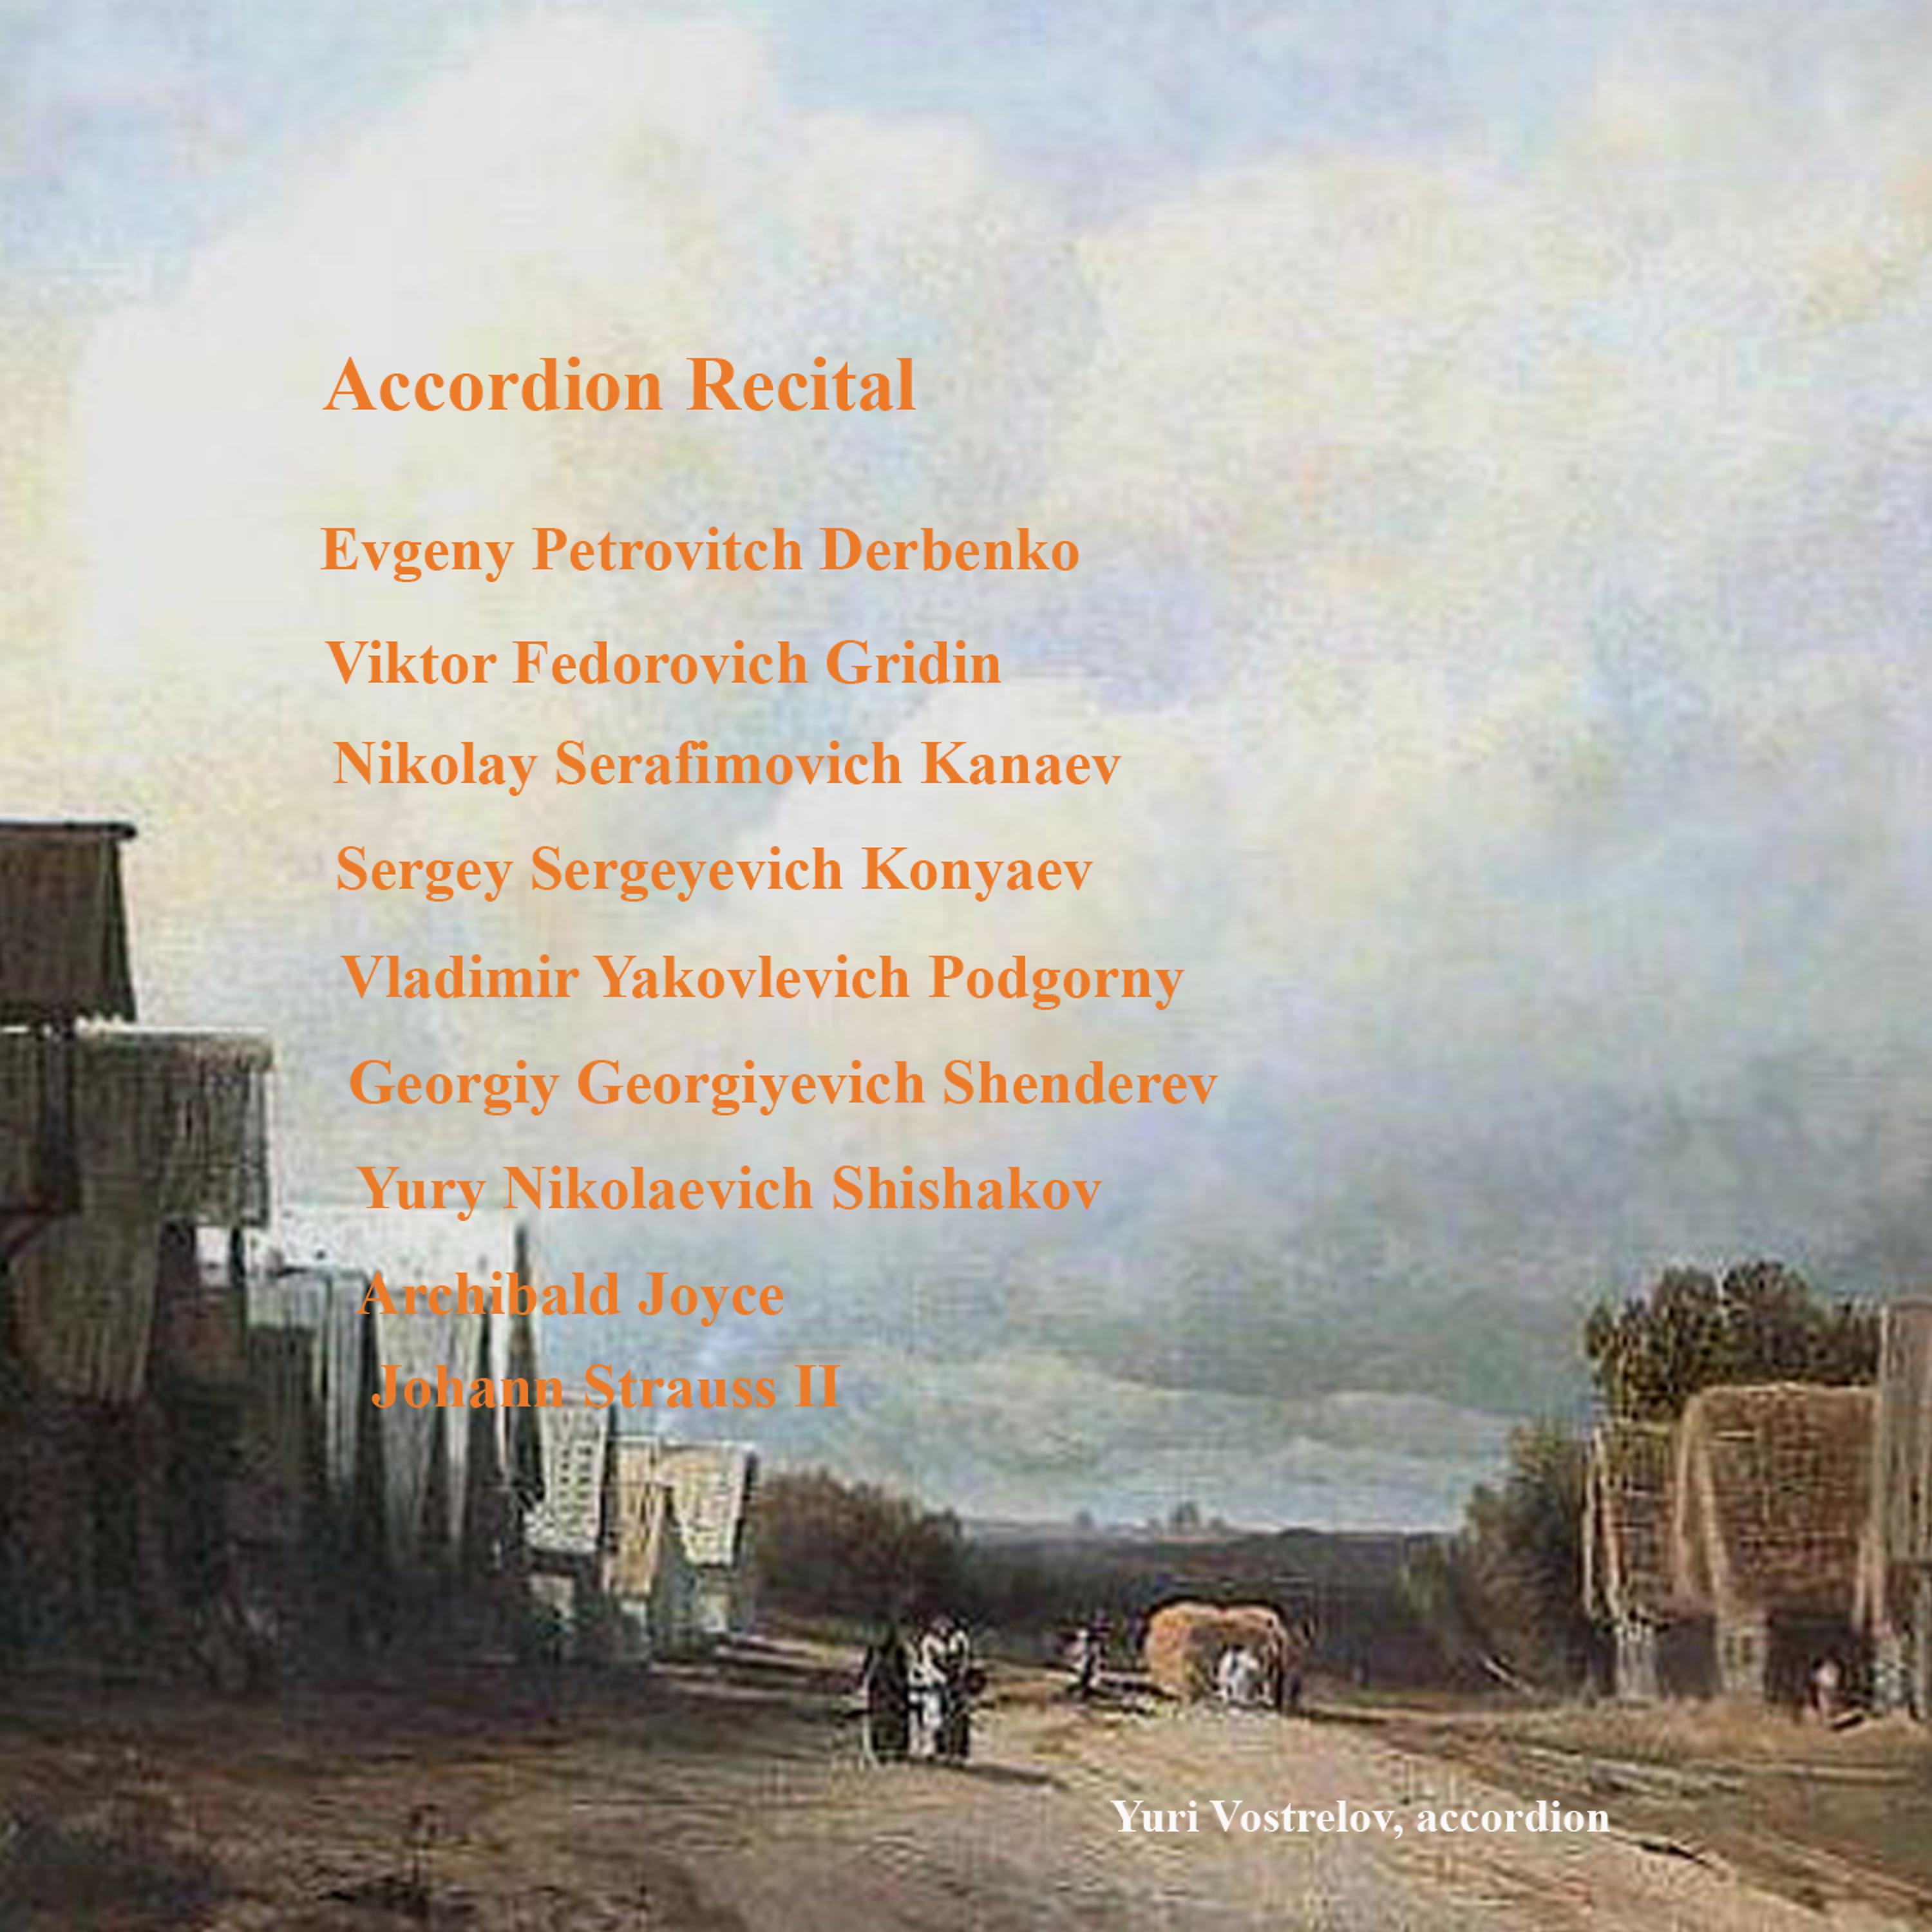 Постер альбома Accordion Recital: Derbenko, E.P., Gridin, V.F., Kanaev, N.S., Konyaev, S.S., Podgorny, V.Y., Shenderev, G.G., Shishakov, Y.N., Joyce, A., Strauss II, J.